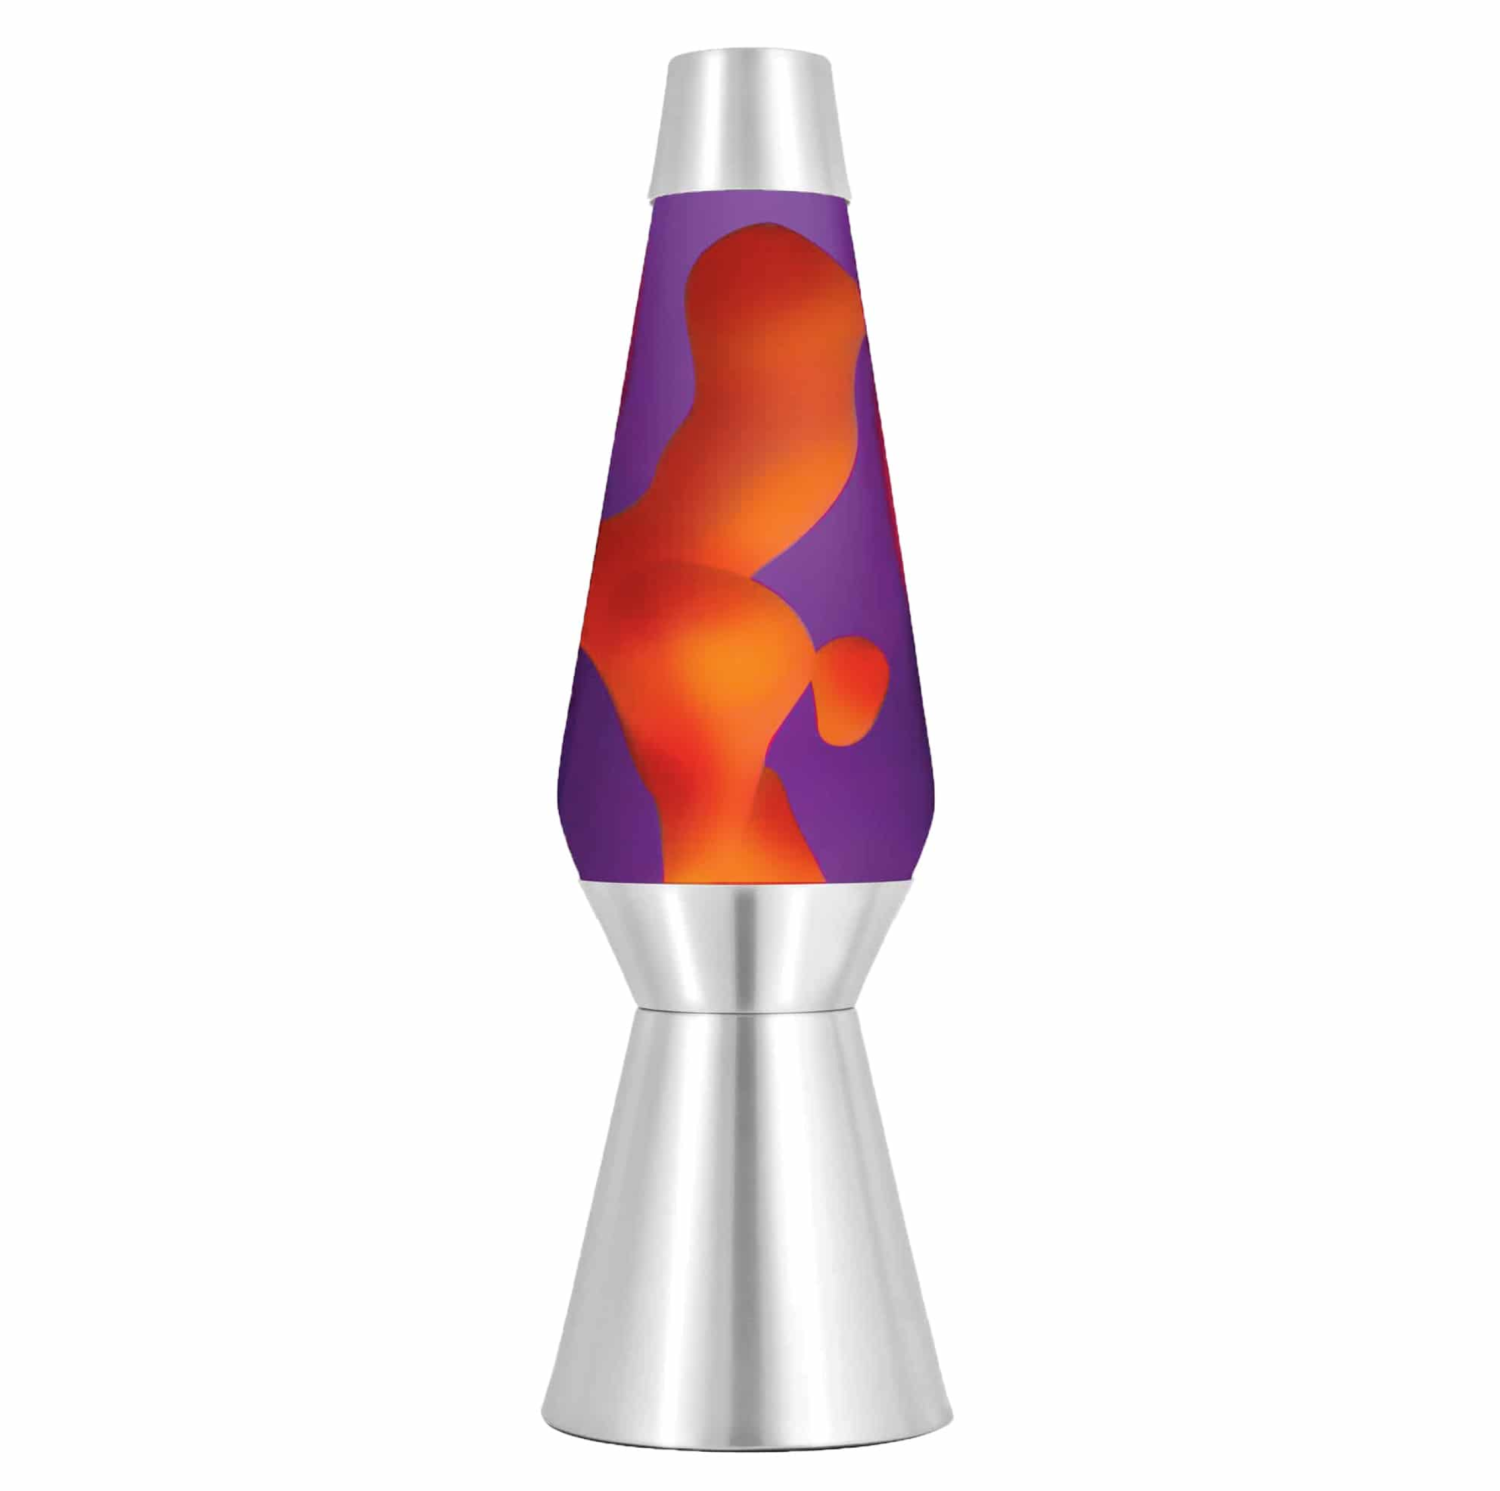 lava lamps hd purple